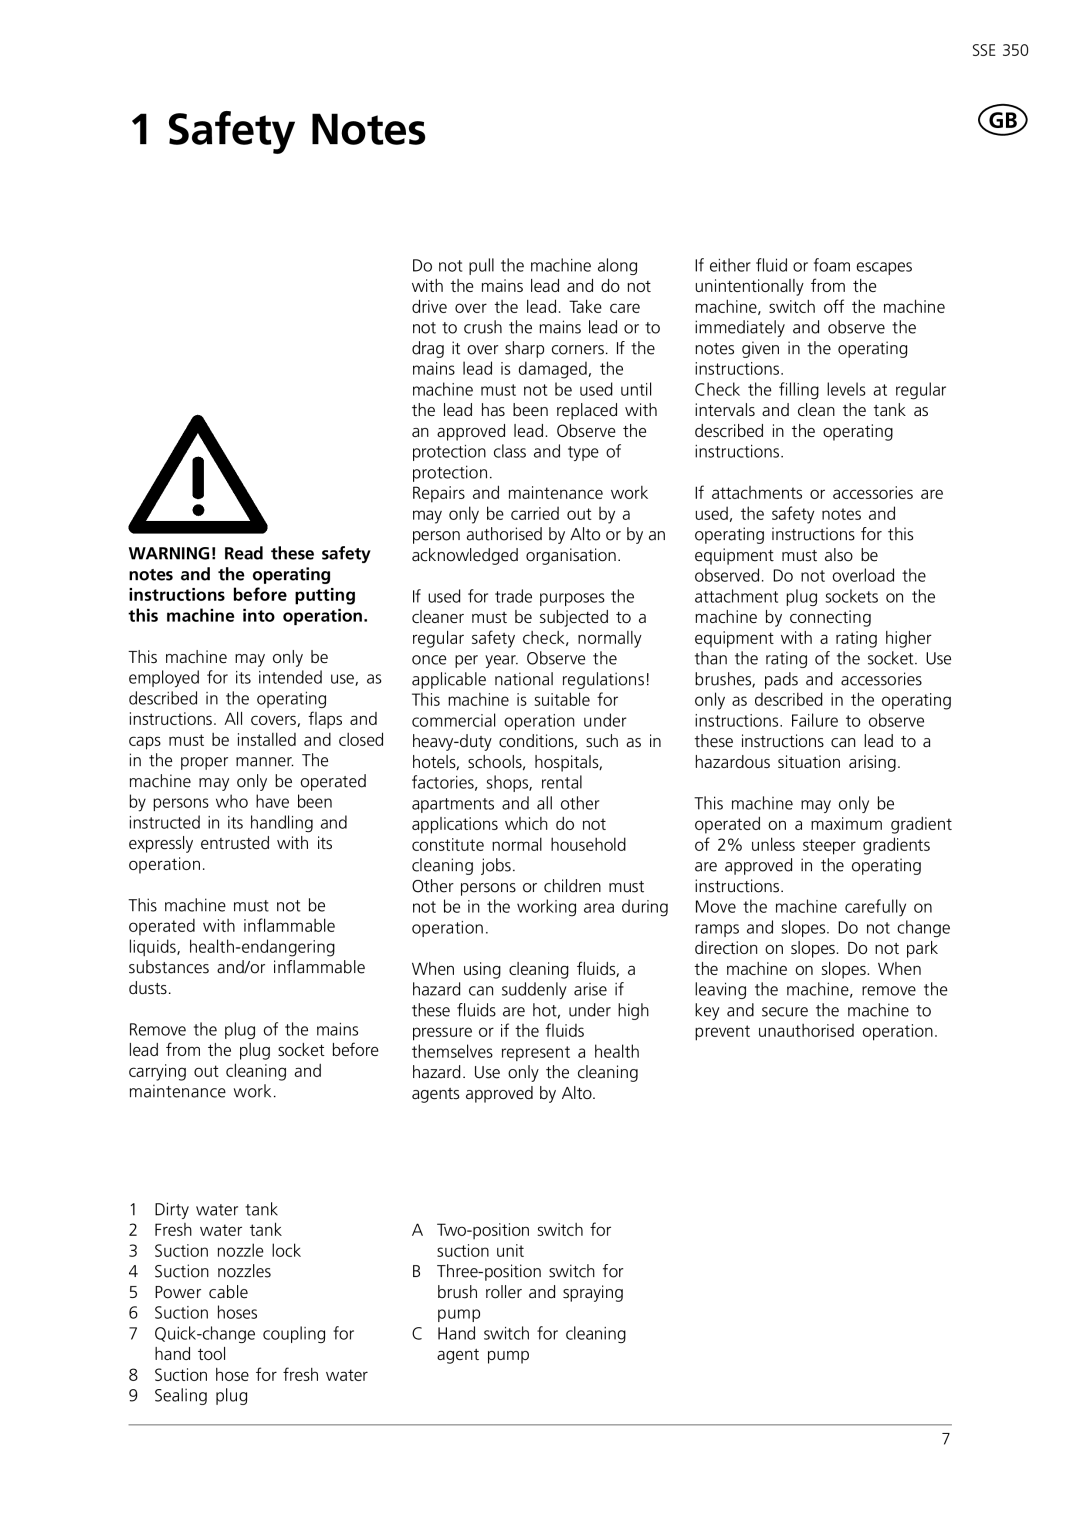 Nilfisk-ALTO SSE 350 manual Safety Notes 